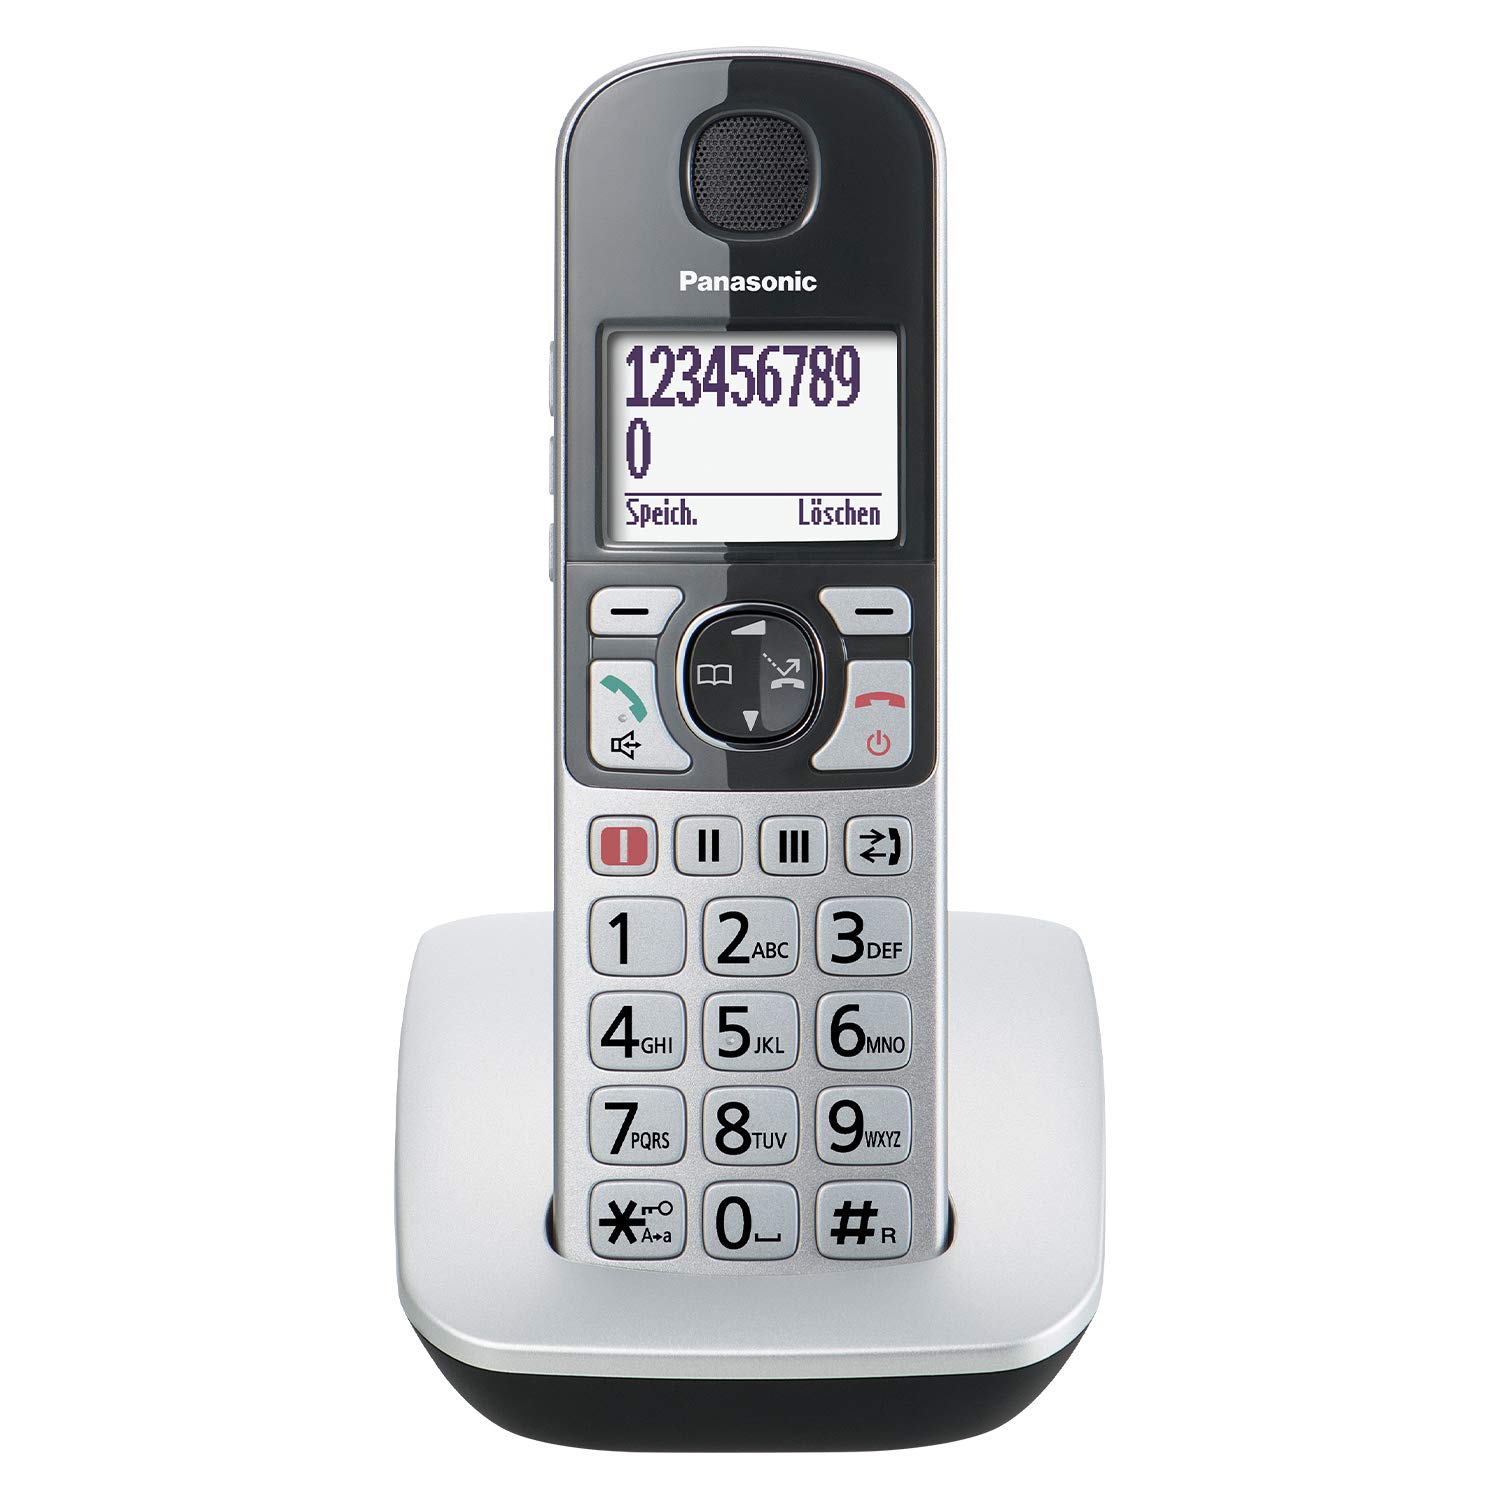 Panasonic KX-TGE510GS DECT Seniorentelefon mit Notruf (Großtastentelefon, schnurlos, extra Lautstärke, hörgerätekompatibel, Eco-Plus) silber-schwarz